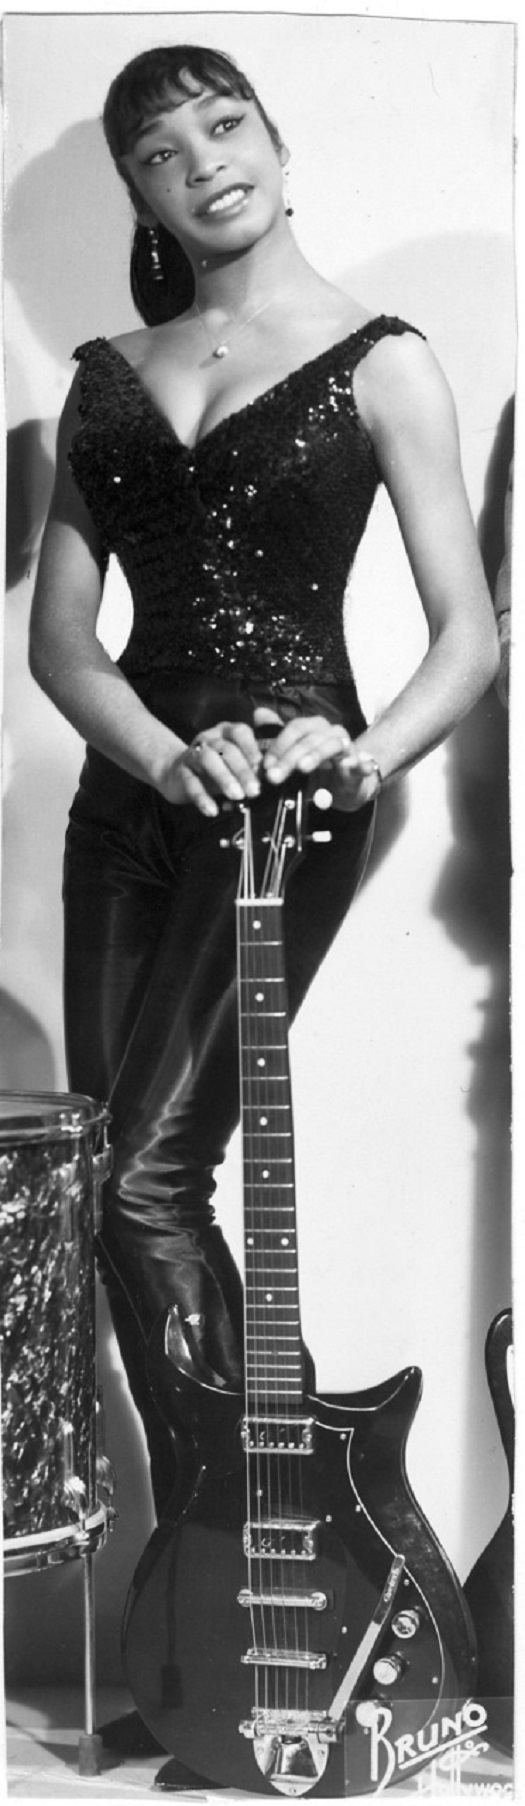 Peggy Jones (musician) Peggy Jones The First AfricanAmerican Female Rock Guitarist